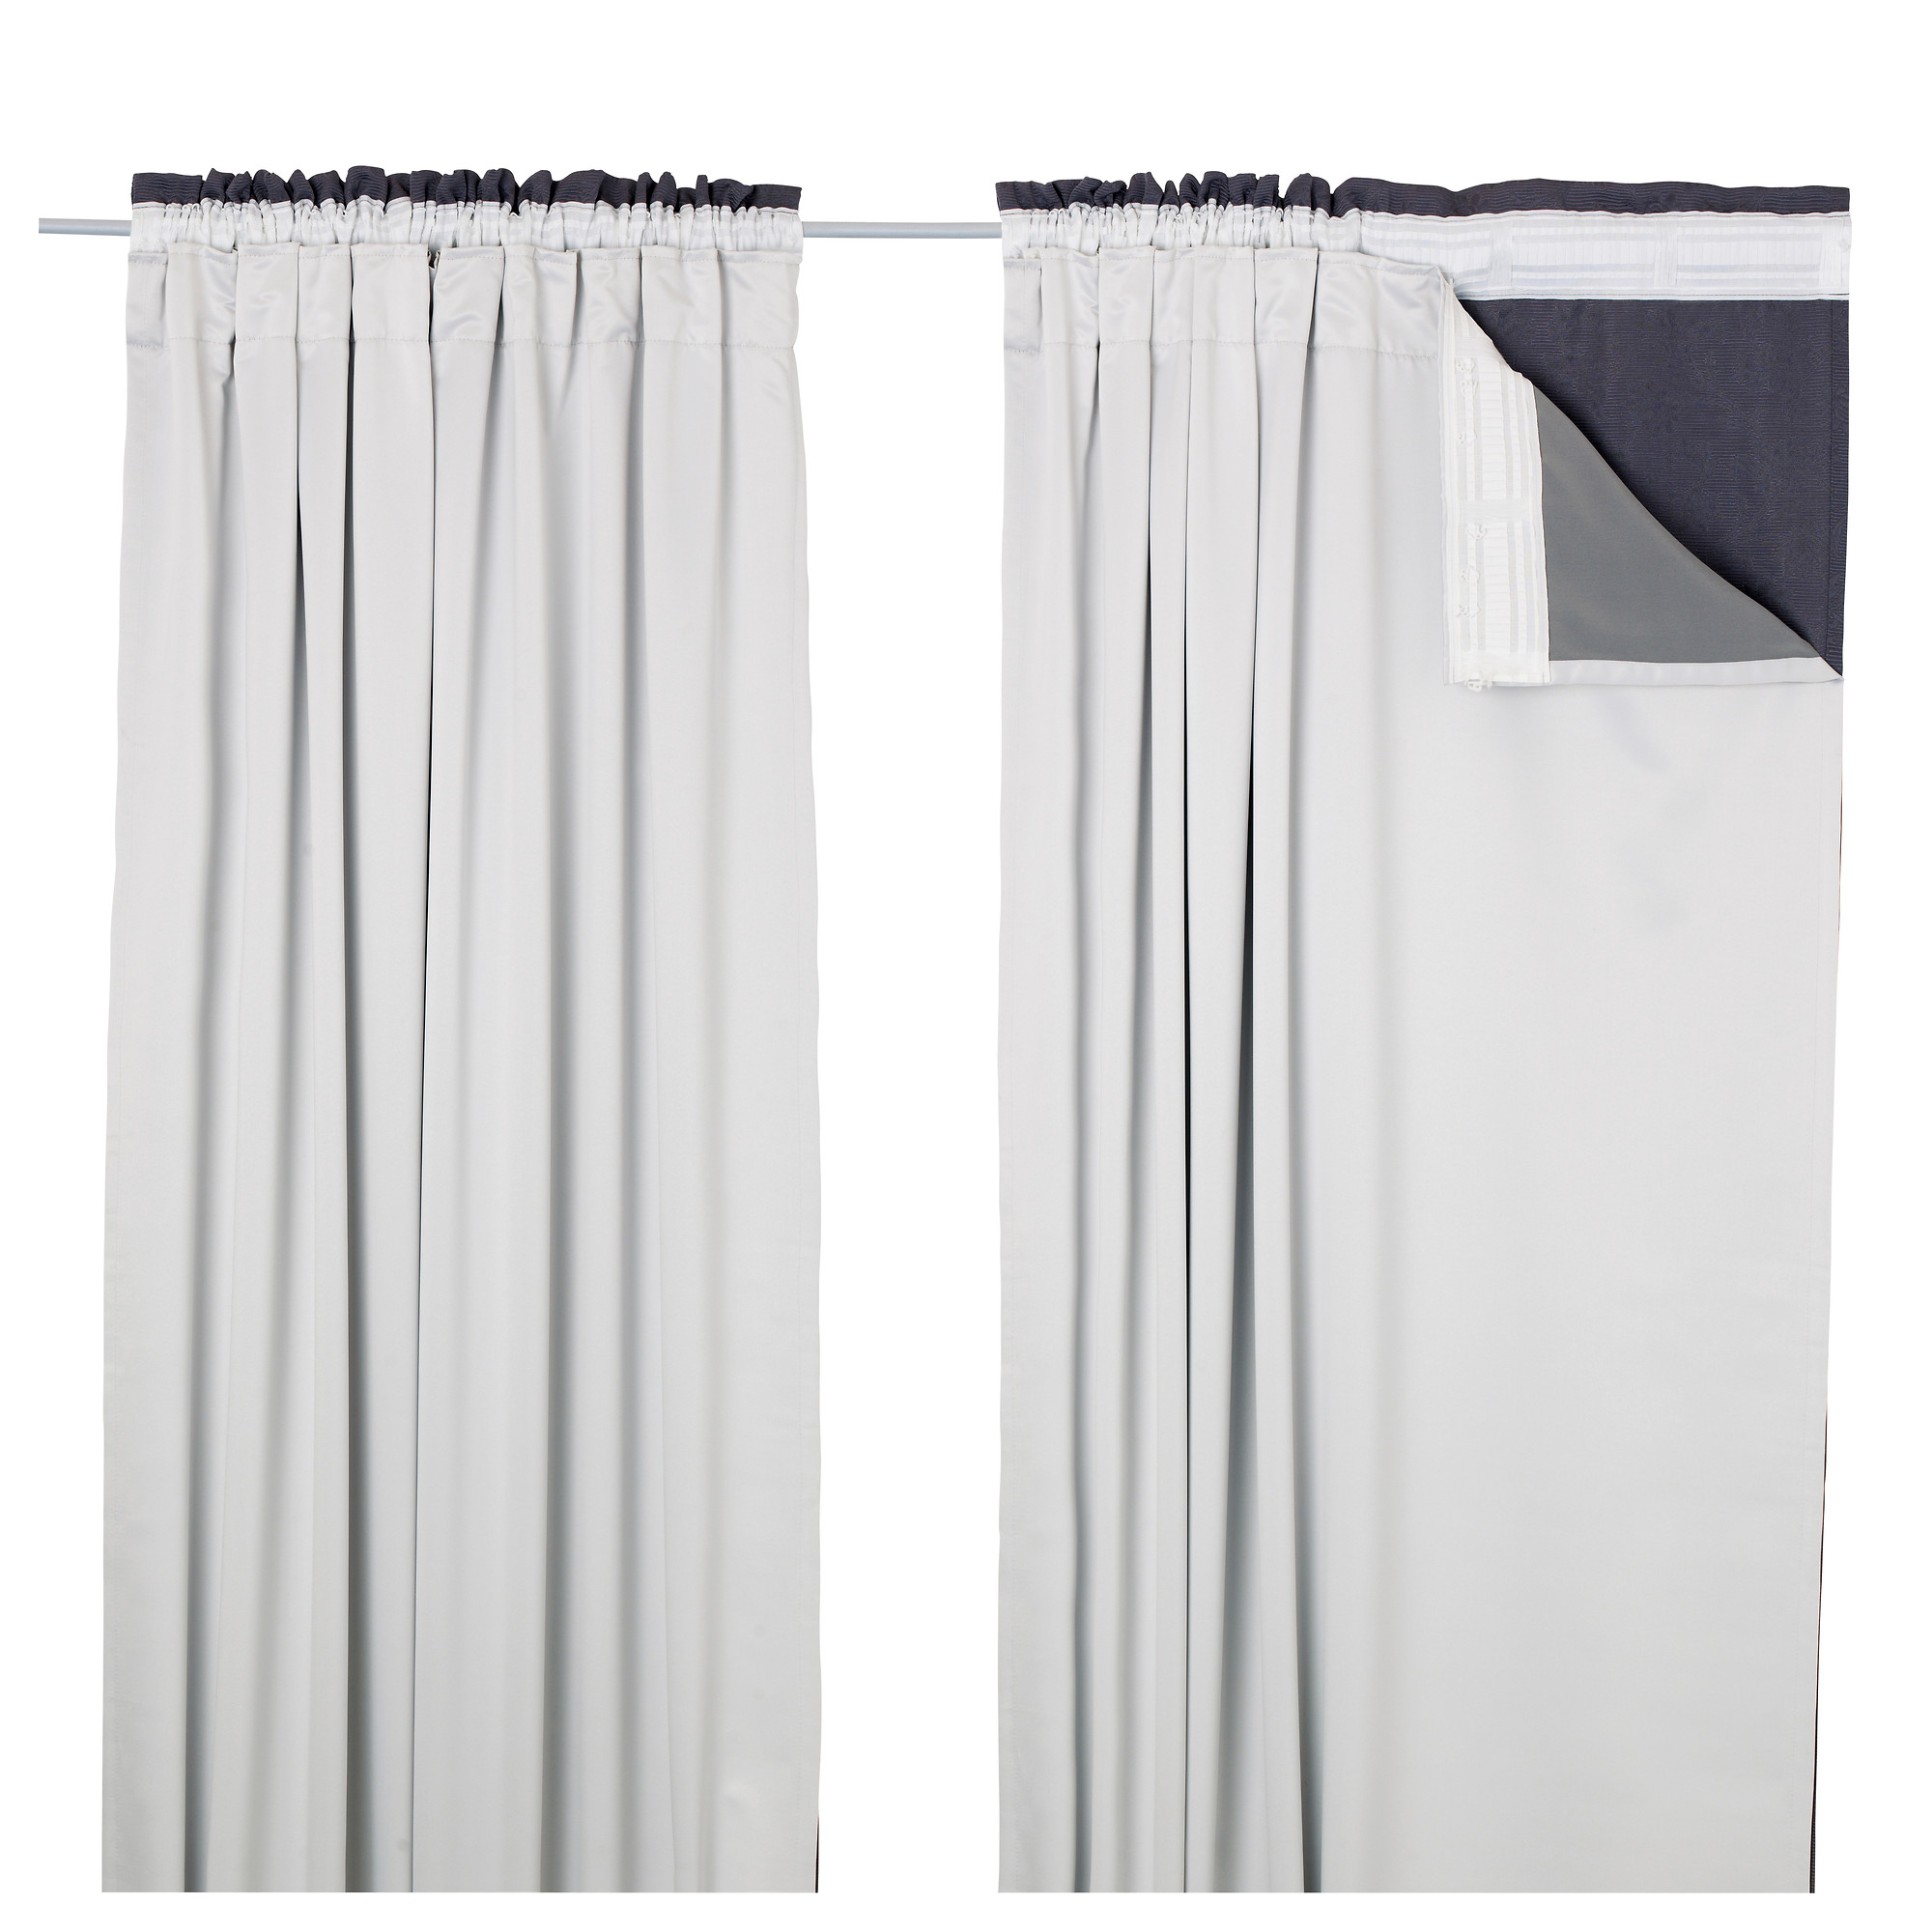 GLANSNÄVA curtain liners, 1 pair